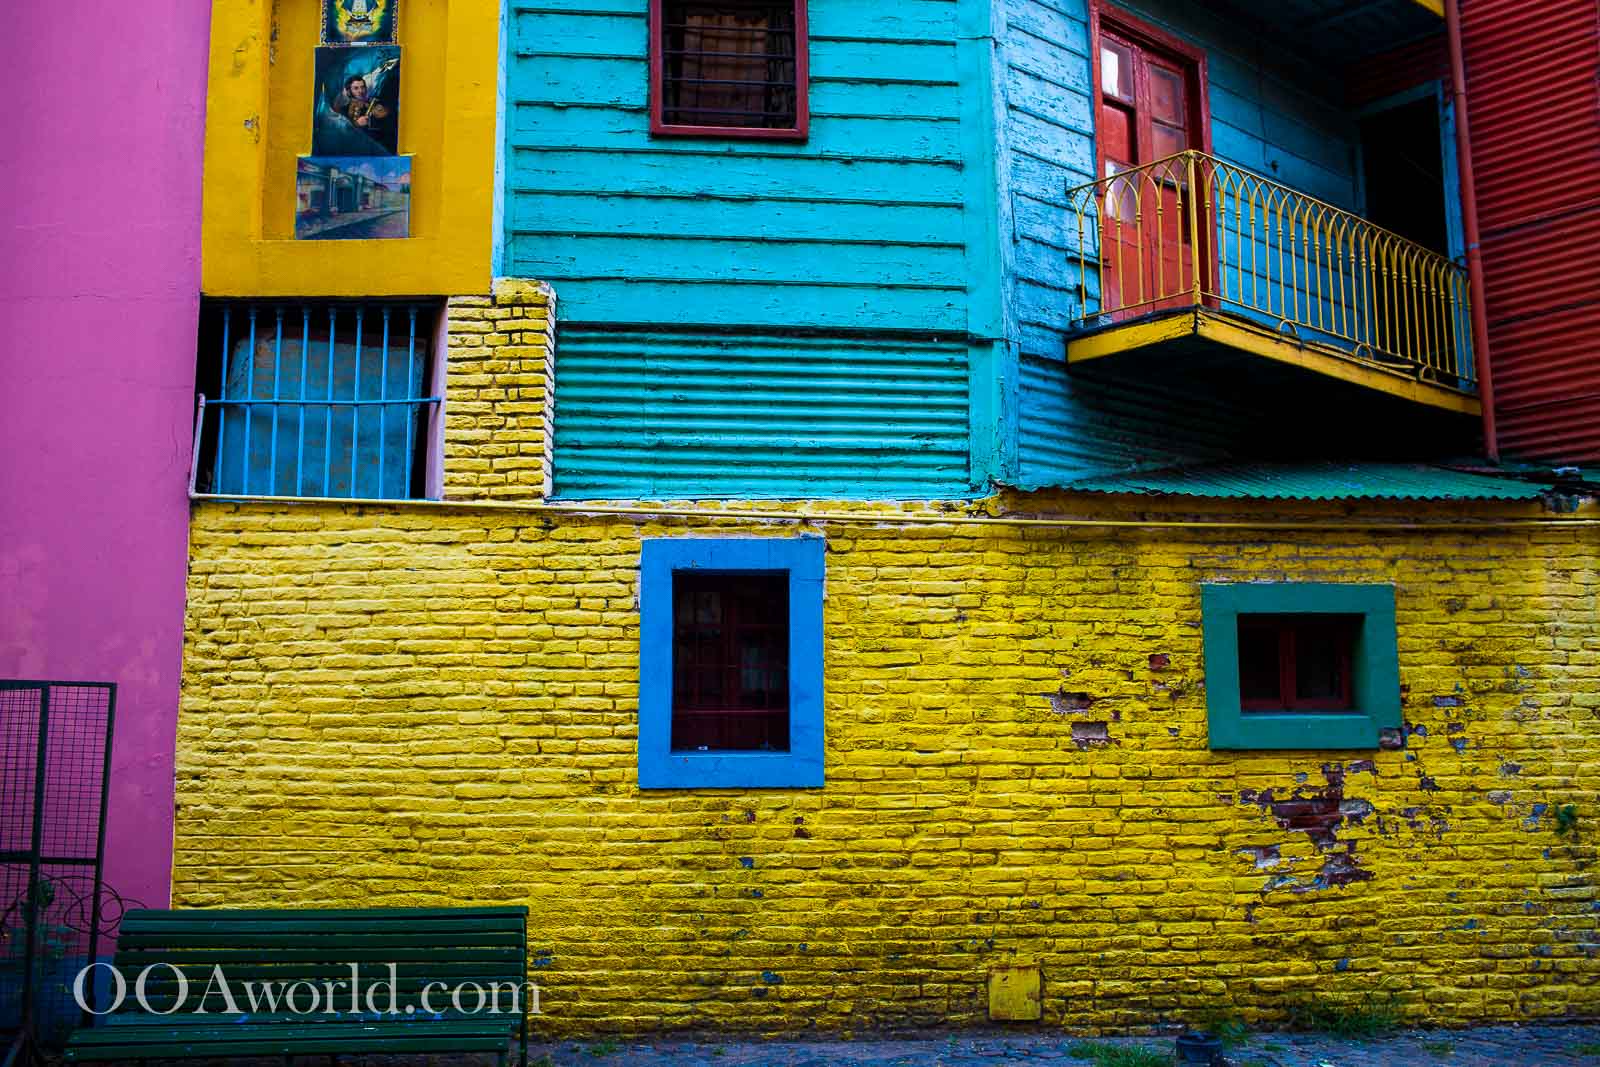 La Boca Photos Buenos Aires Argentina Ooaworld